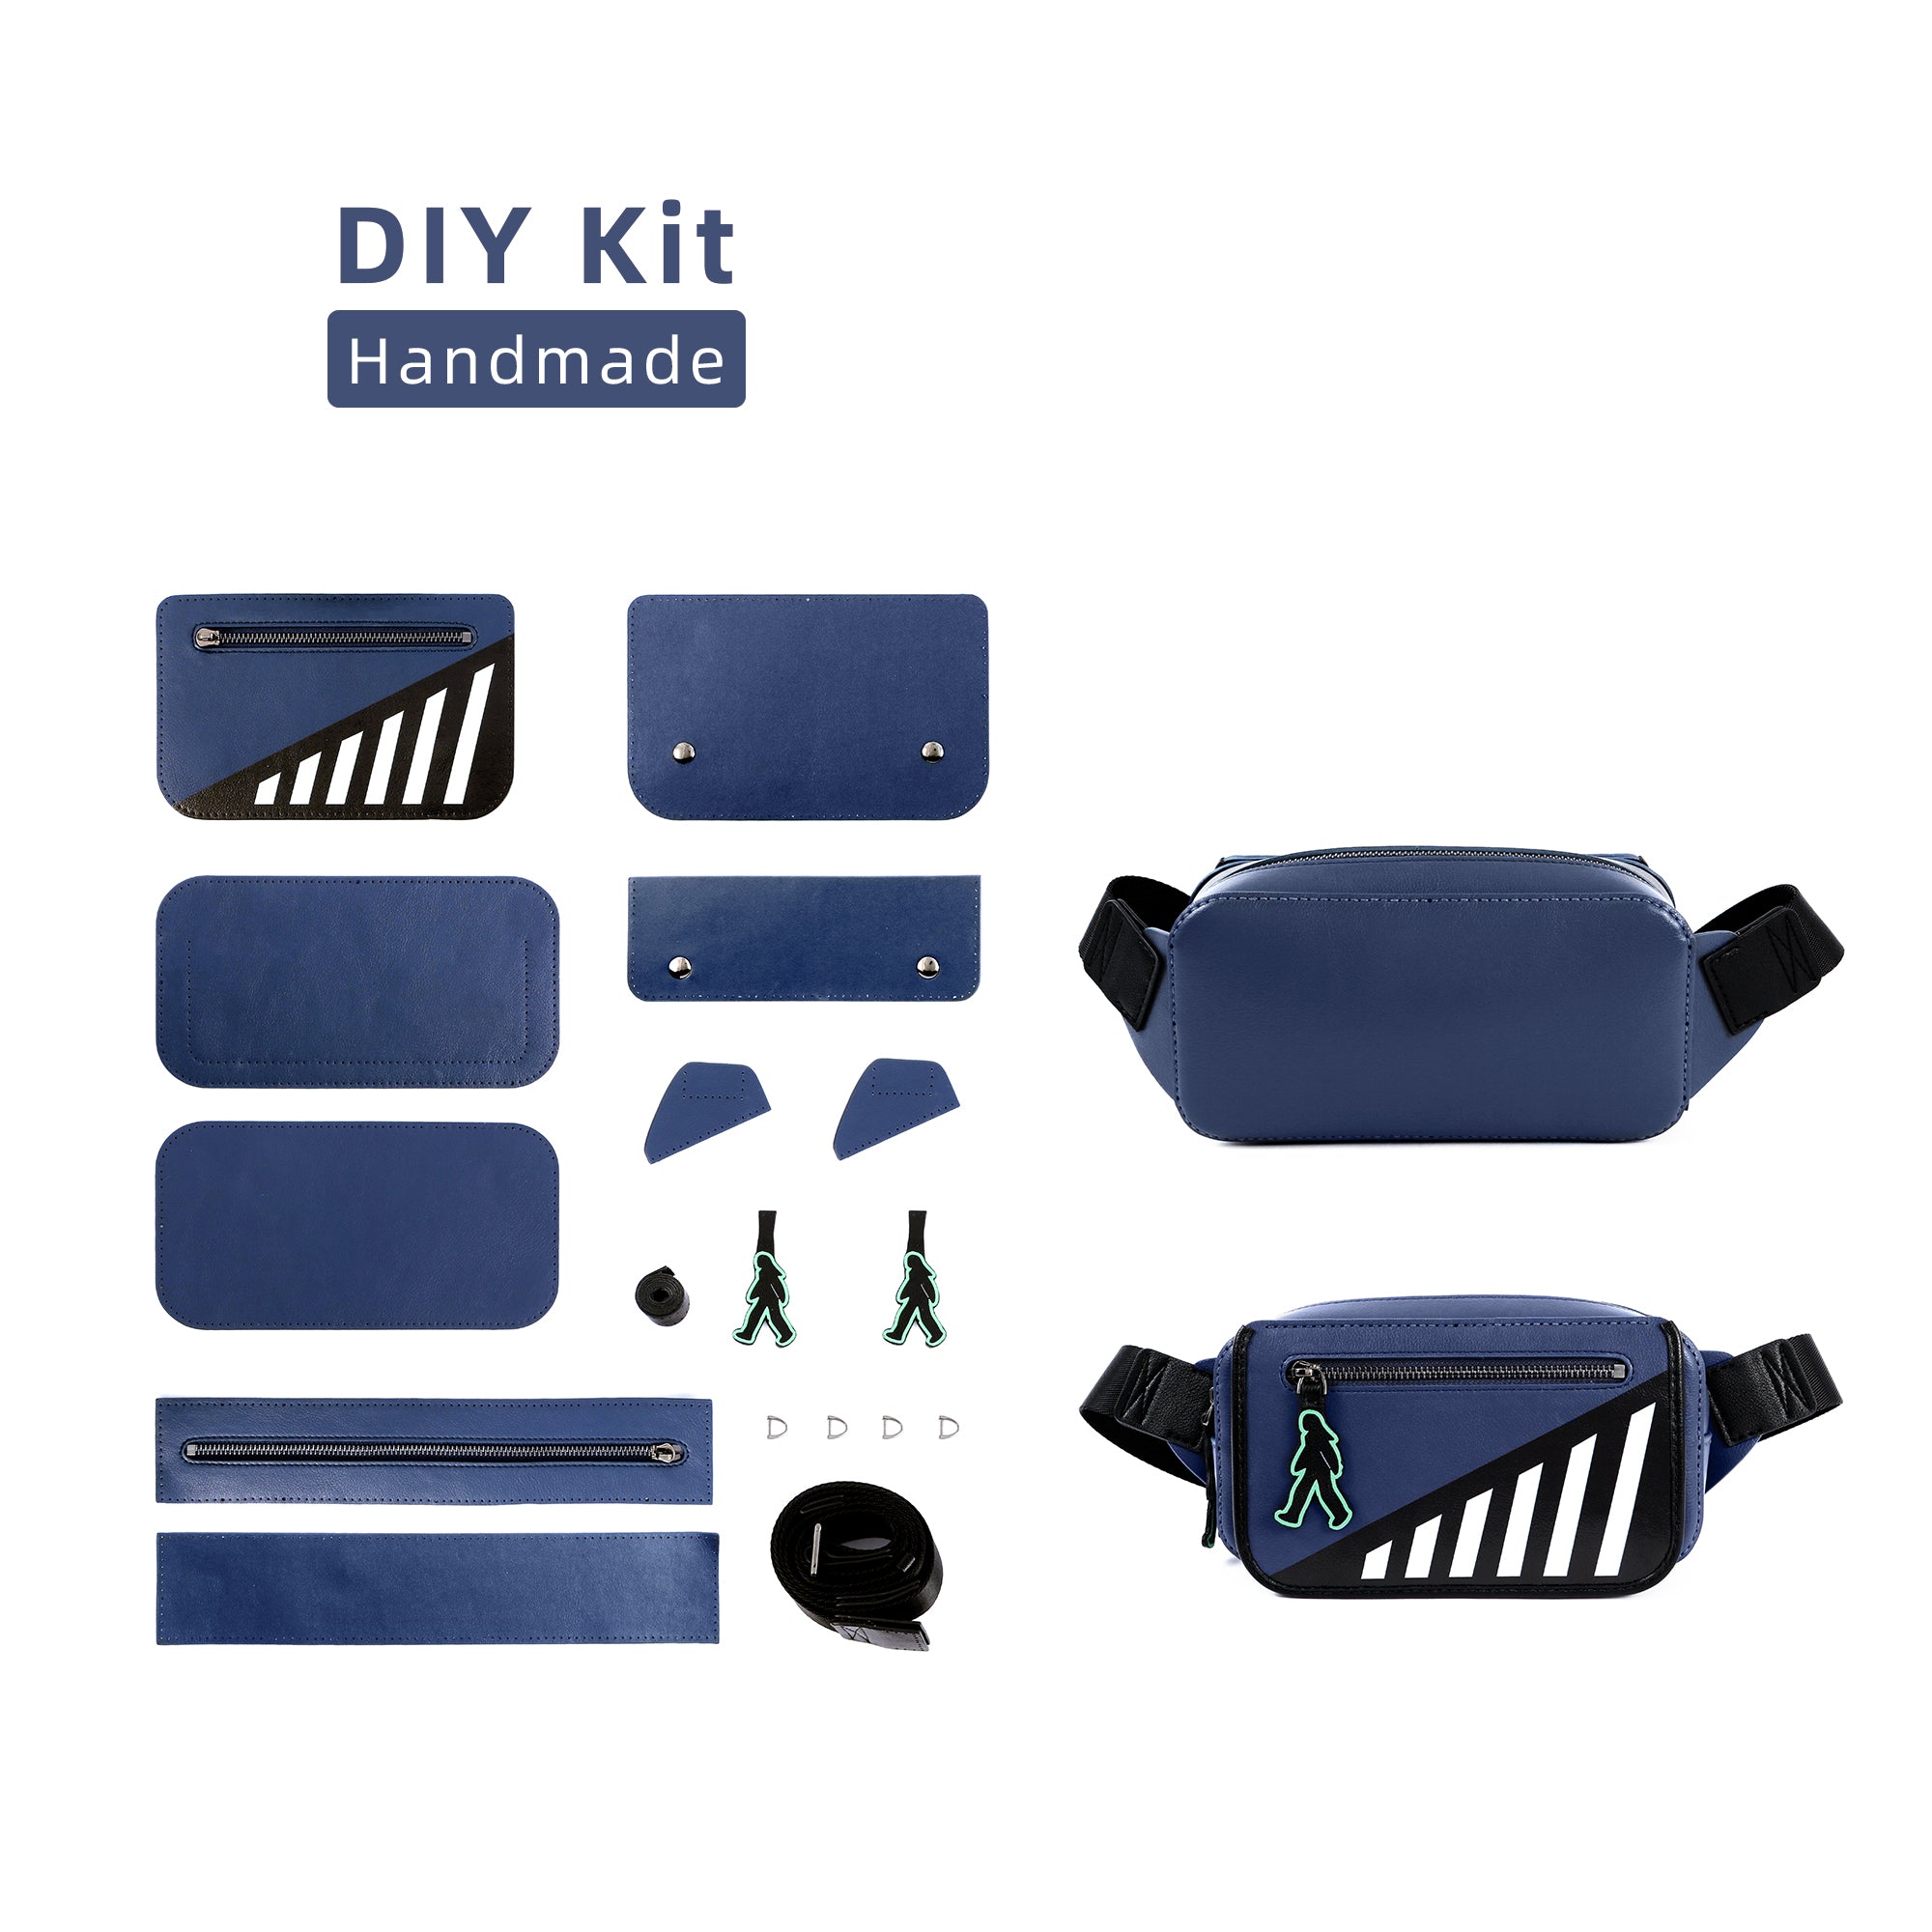 DIY Bag Kits - Heartfelt Collection Chest Bag